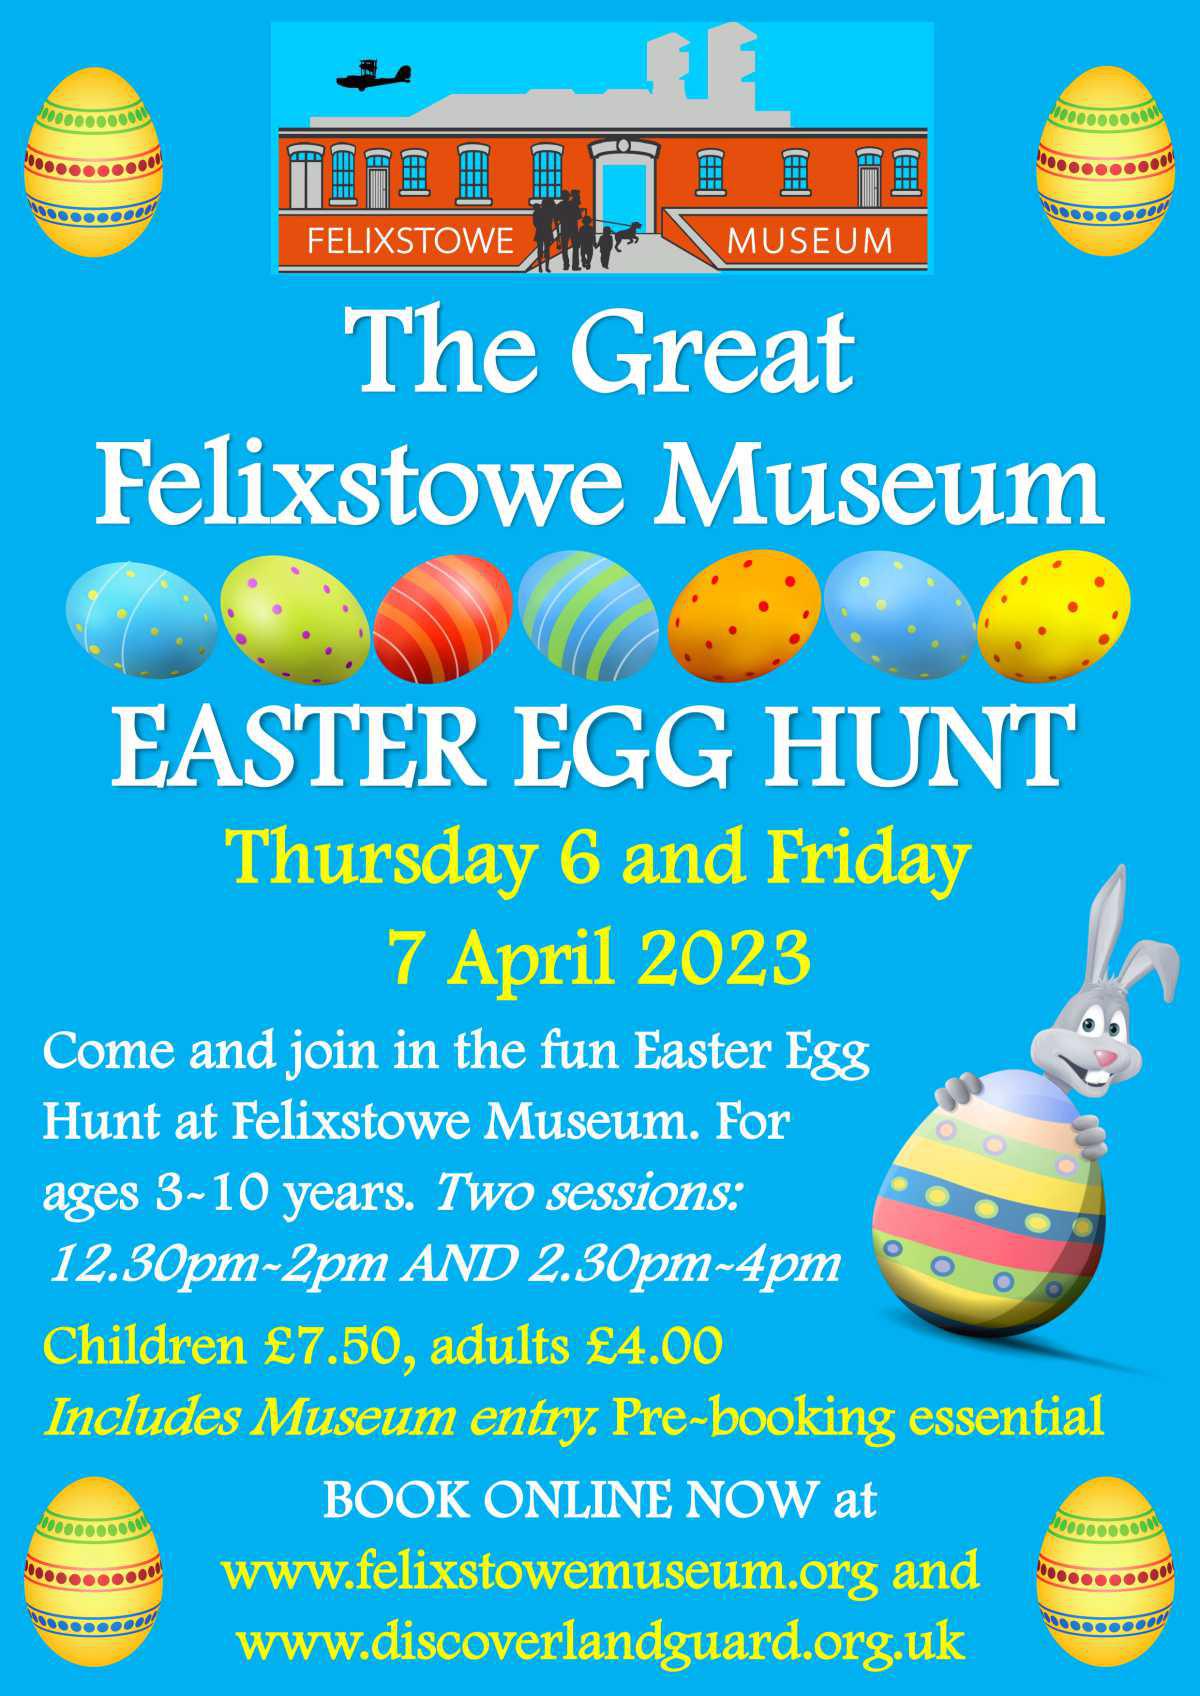 Easter Eggs Galore at Felixstowe Museum!